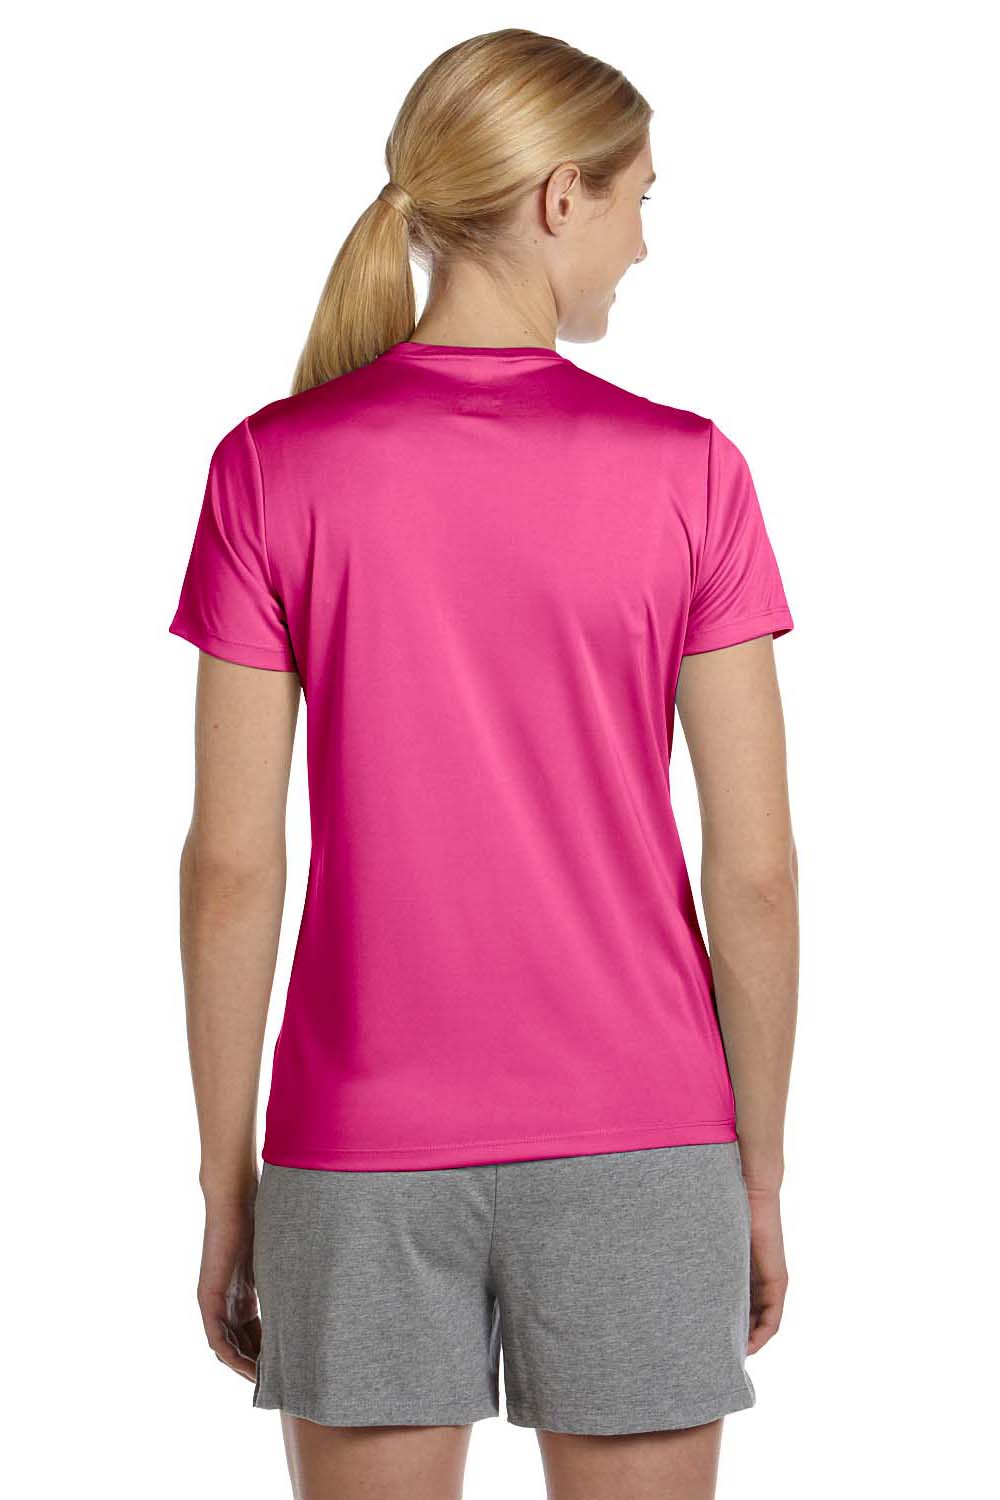 Hanes 4830 Womens Cool DRI FreshIQ Moisture Wicking Short Sleeve Crewneck T-Shirt Wow Pink Back